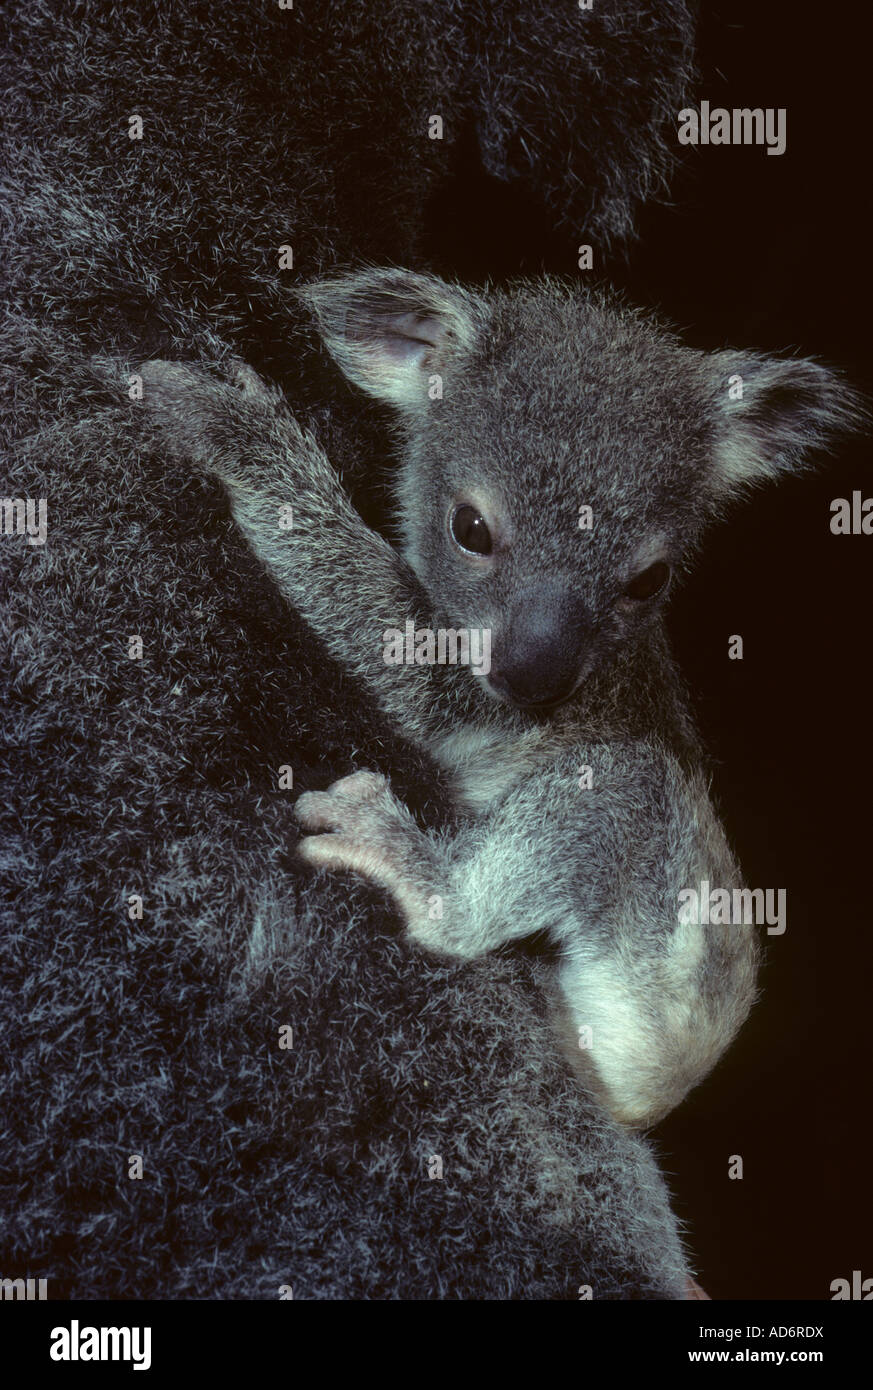 Koala Baby Phascolarctos cinereus Australia  Clinging to mother Stock Photo